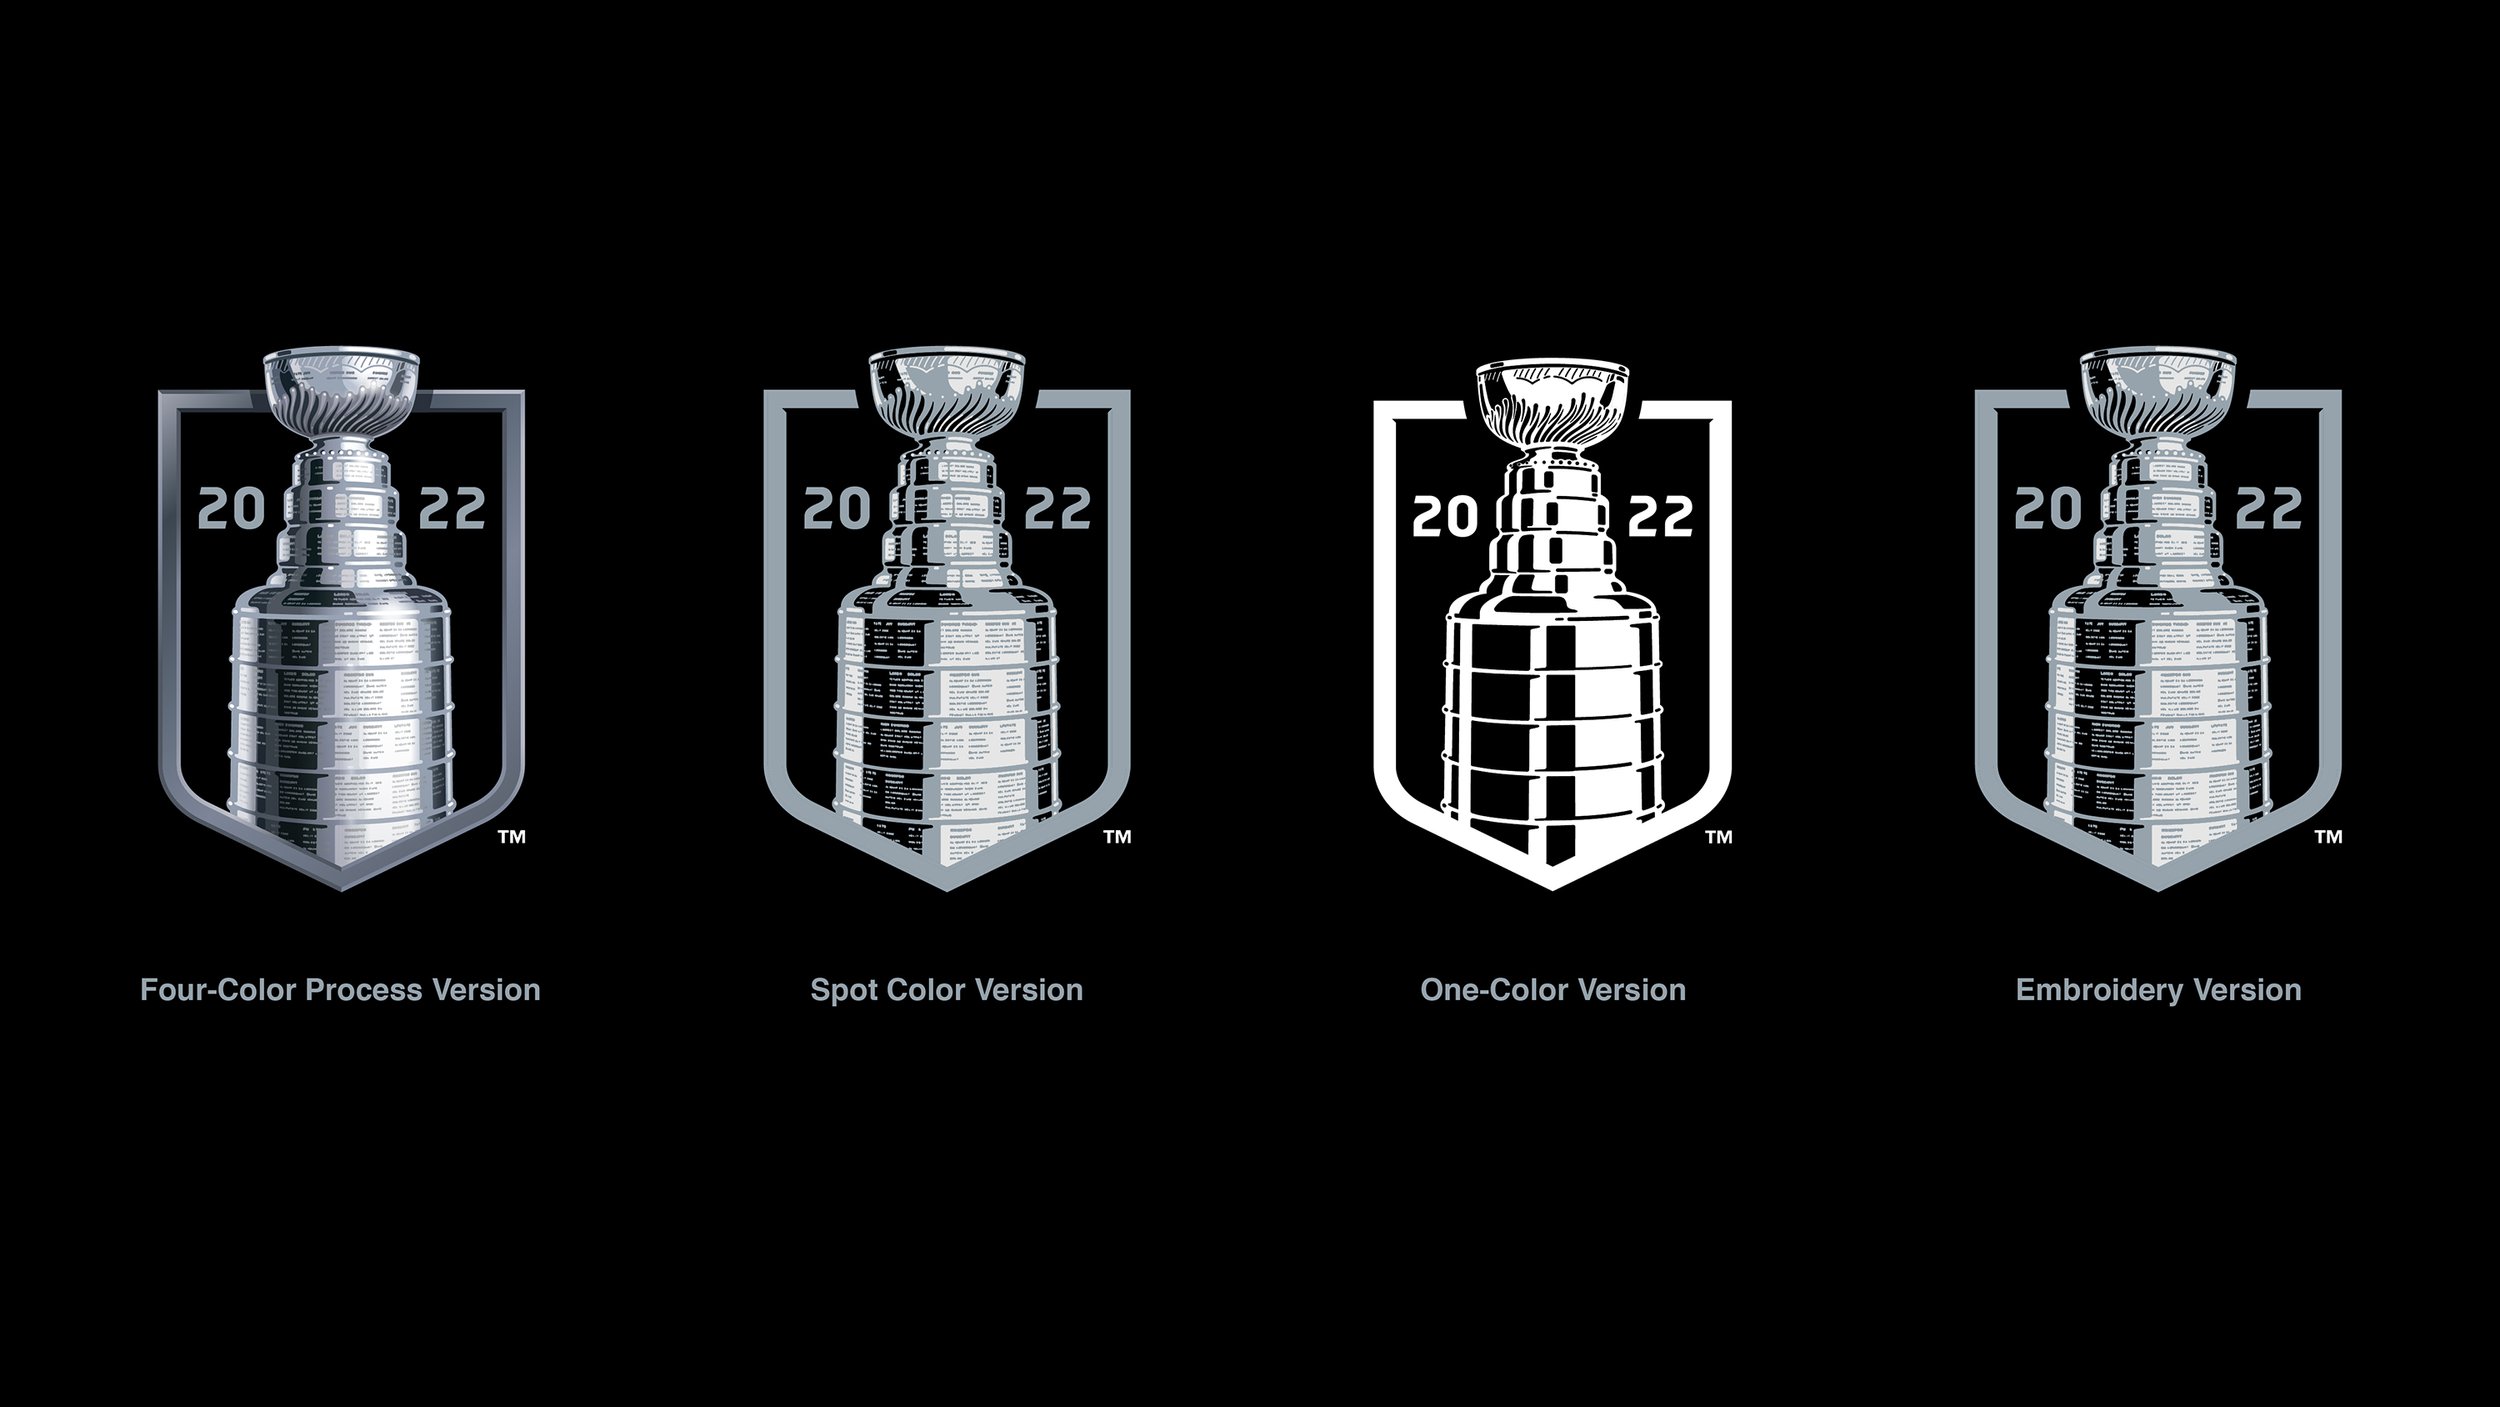 HbD InDepth: Stanley Cup Logo Change Up